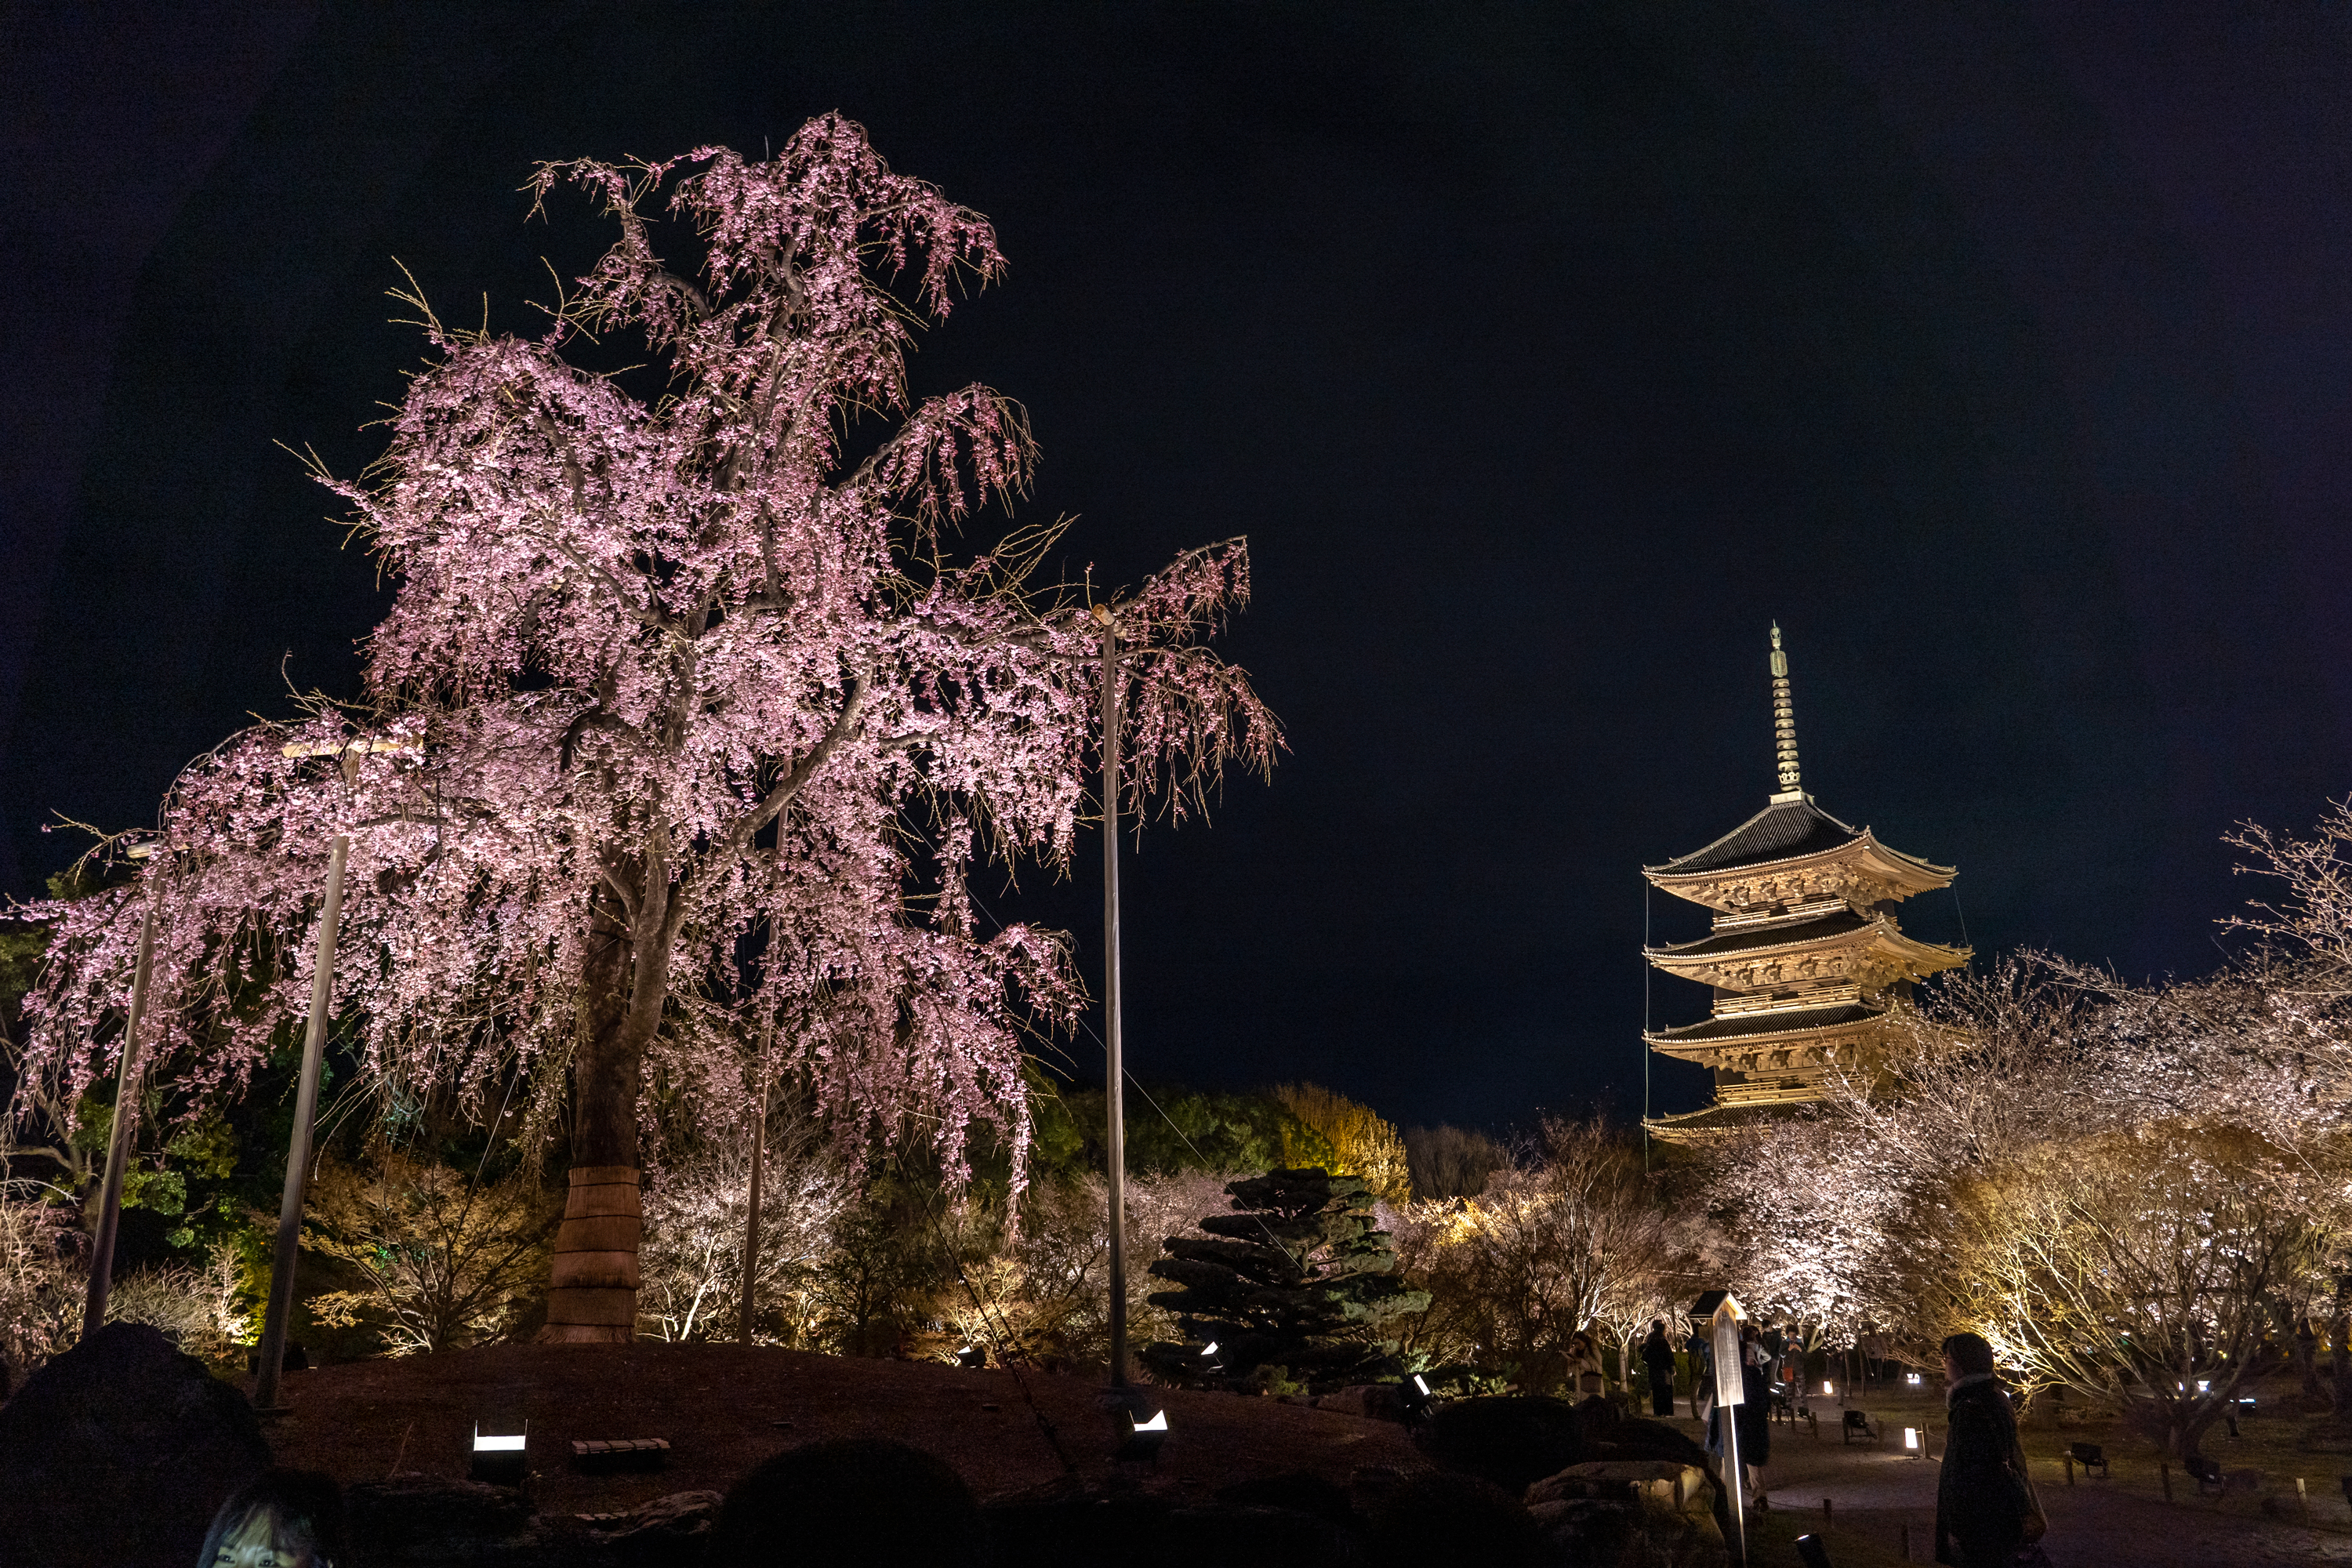 SONY_ILCE-7M3_3098619378-3098668207_1487 京都府 東寺(水面に映る五重塔と桜の美しい景色！ 京都の春におすすめ桜写真スポット！ 撮影した写真の紹介、アクセスや駐車場など)